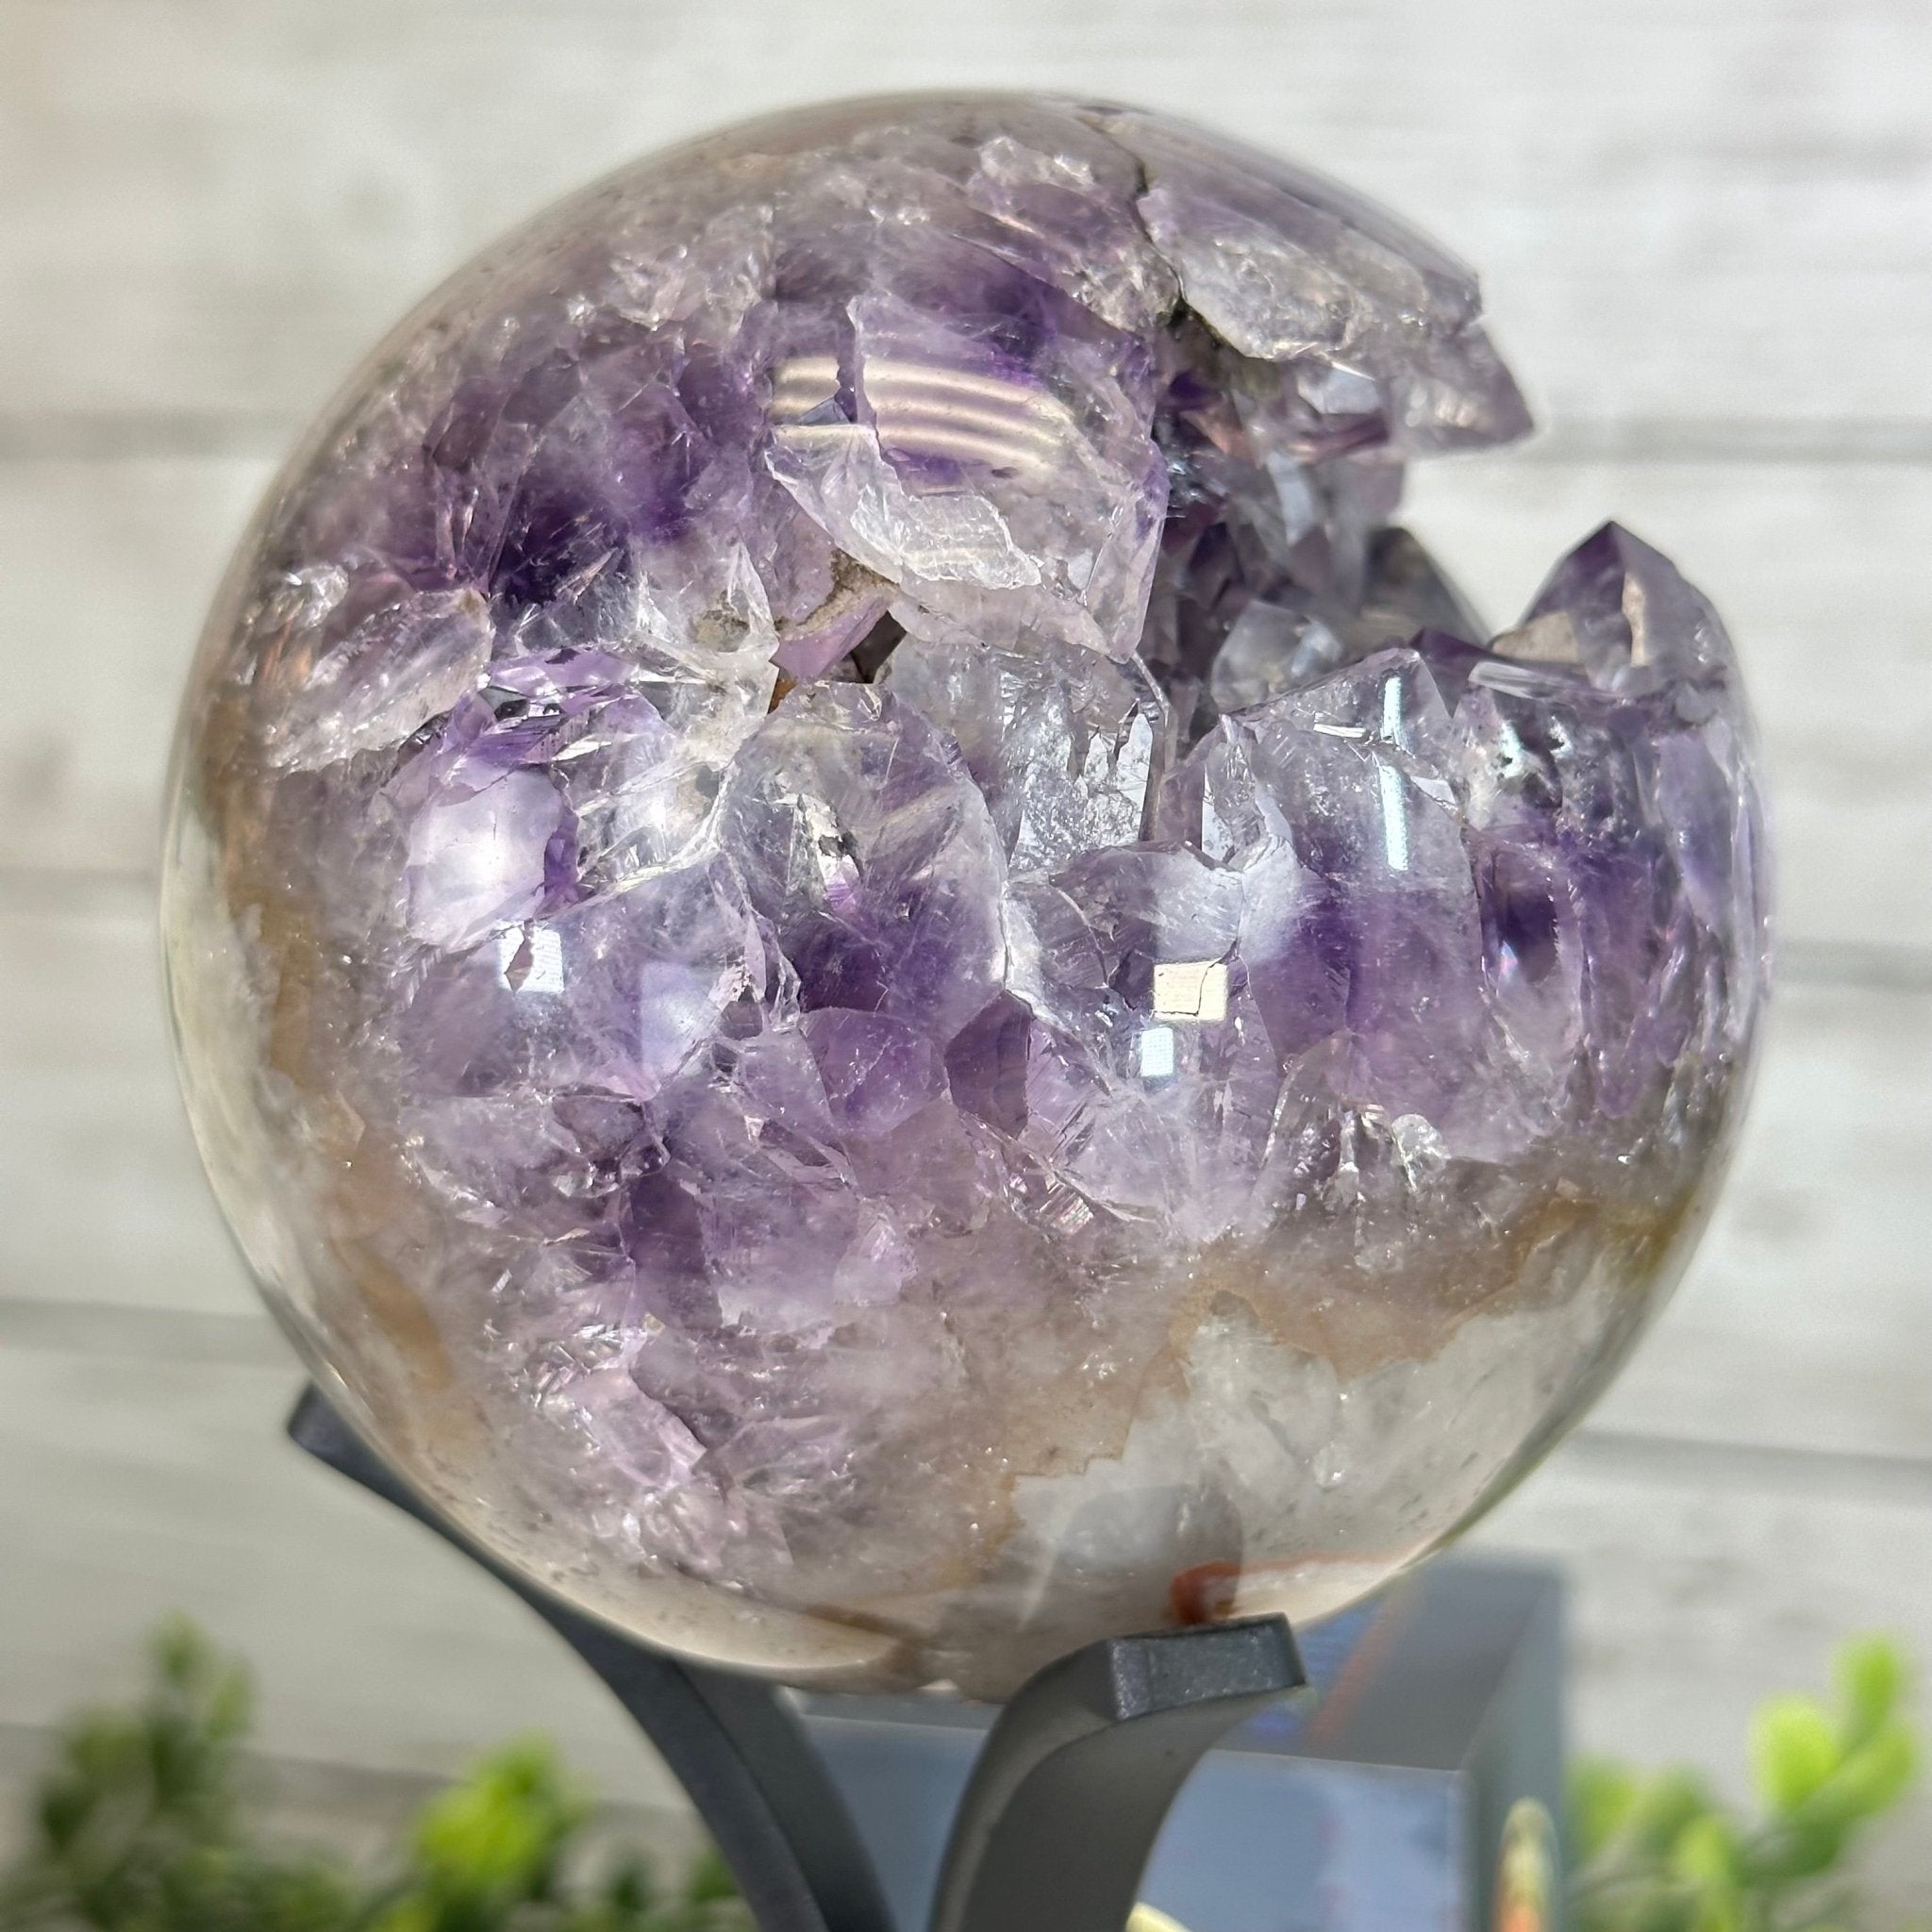 Druzy Amethyst Sphere on a Metal Stand, 2.7 lbs & 8.4" Tall #5630-0052 - Brazil GemsBrazil GemsDruzy Amethyst Sphere on a Metal Stand, 2.7 lbs & 8.4" Tall #5630-0052Spheres5630-0052